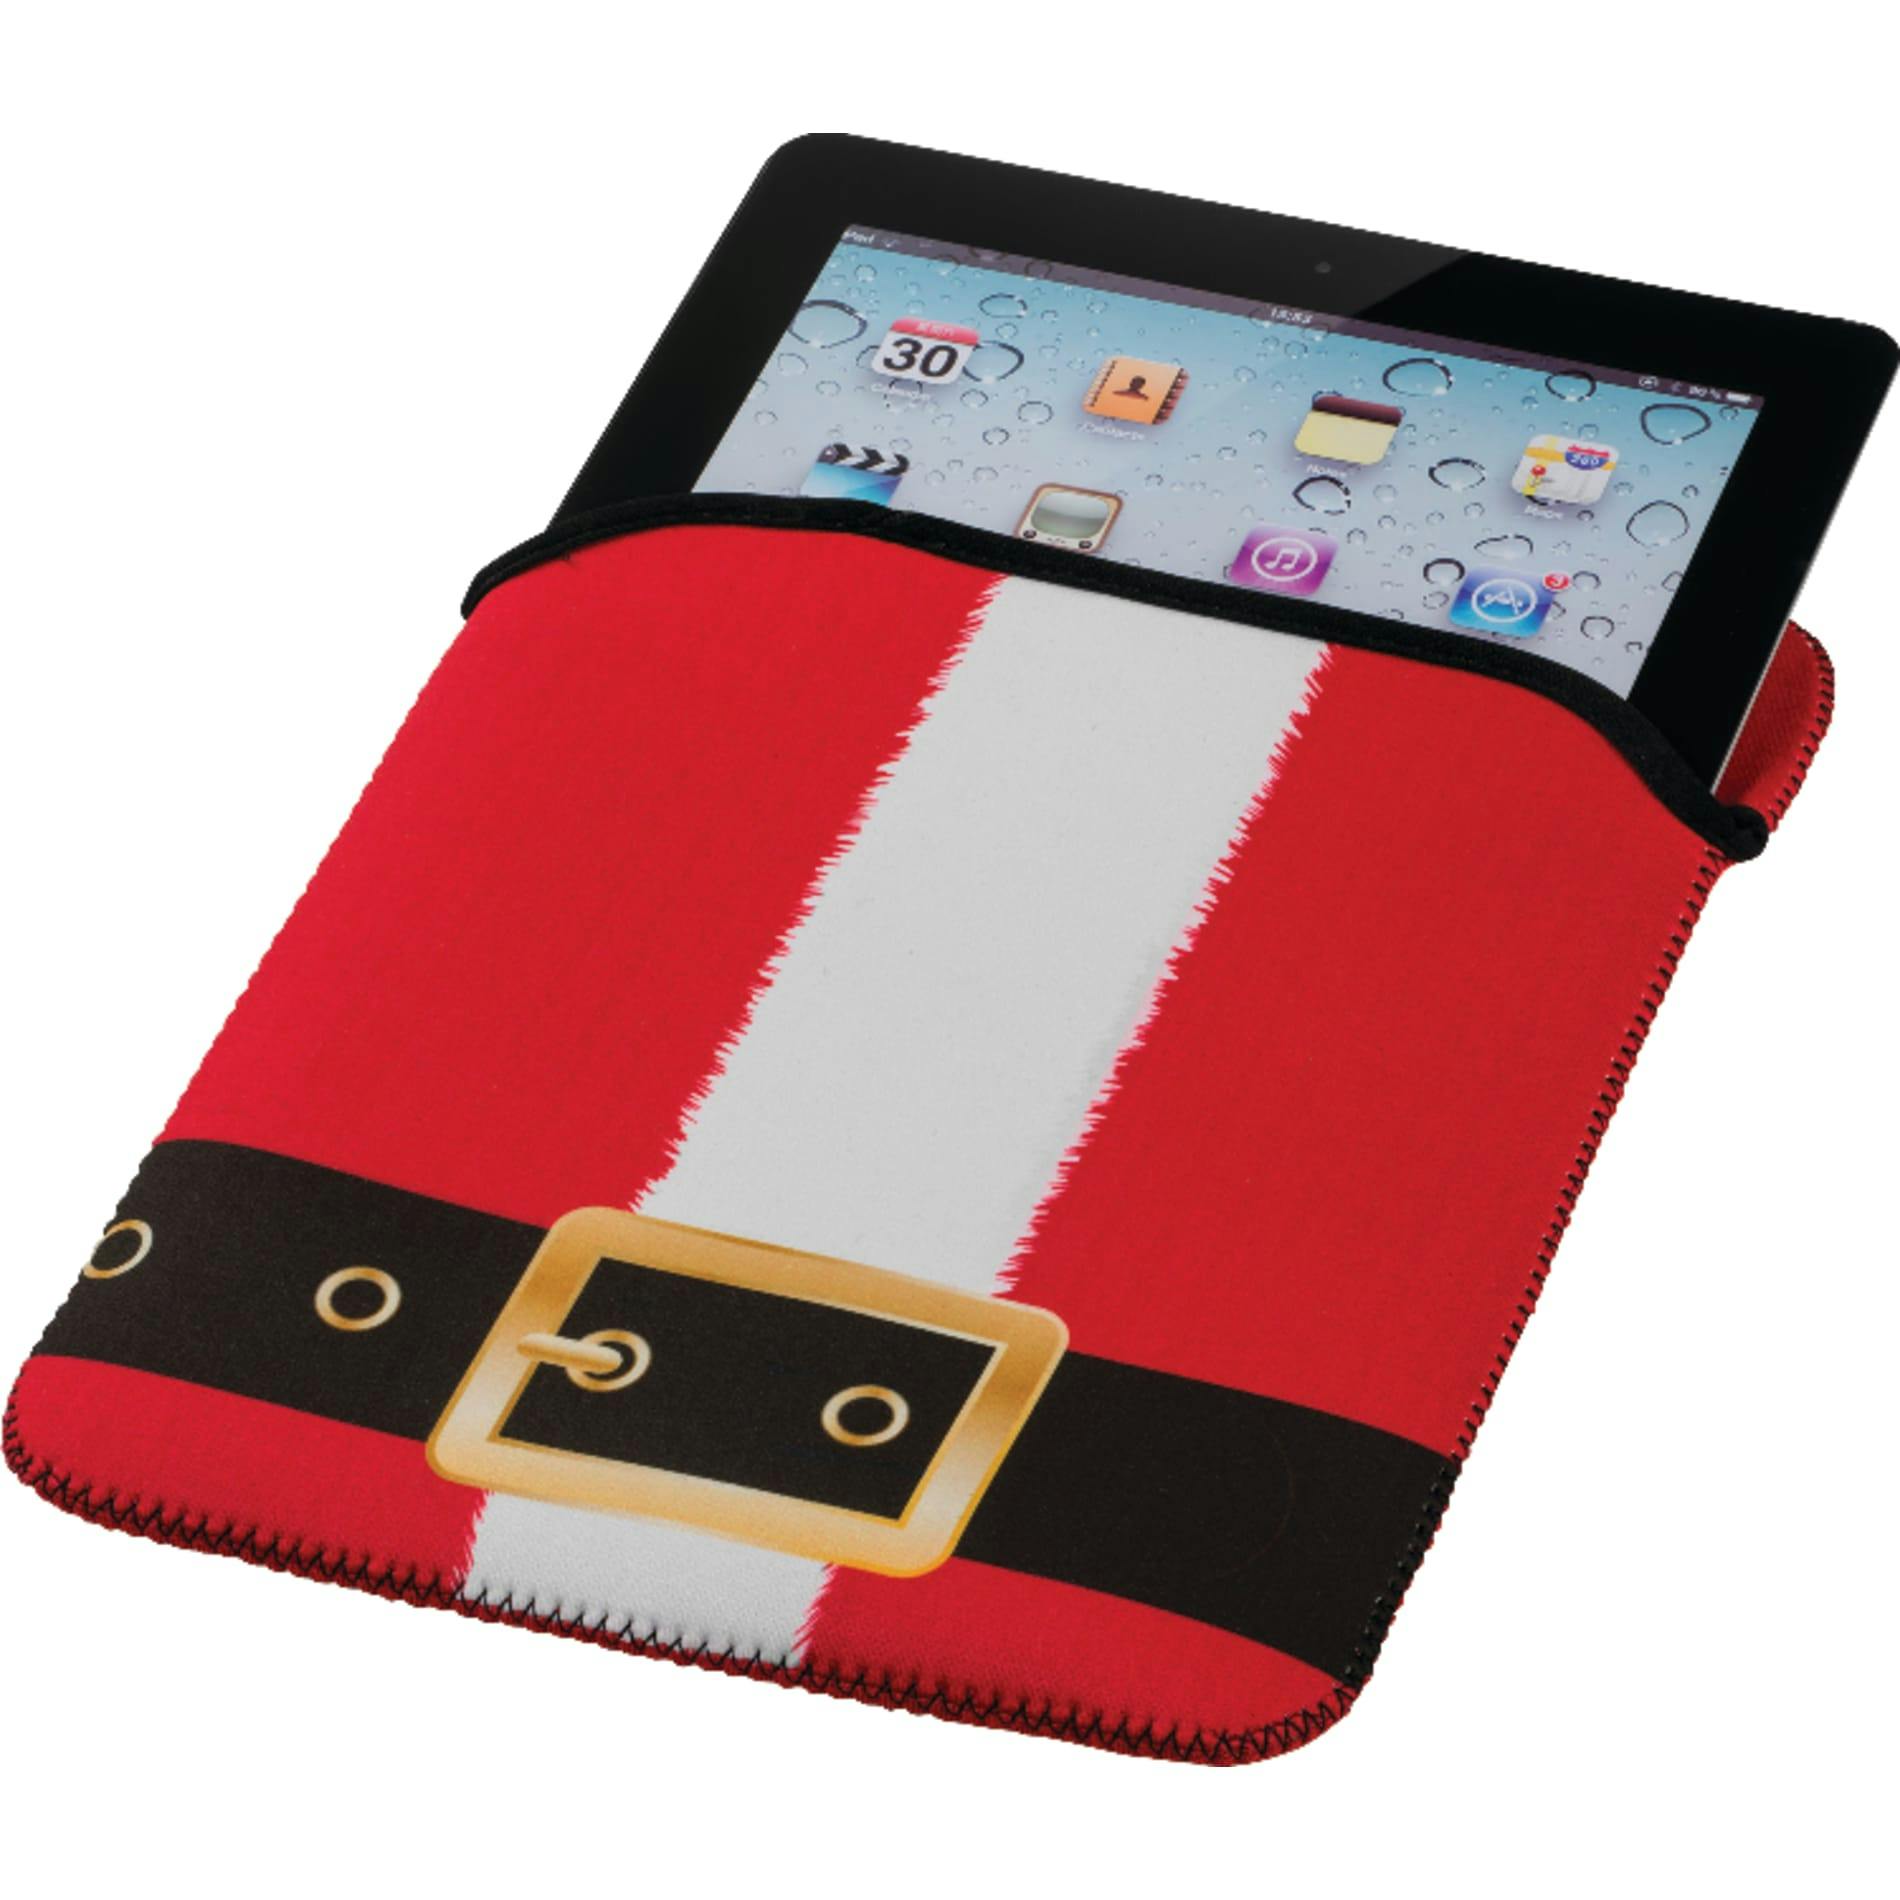 Santa Case for iPad - additional Image 3